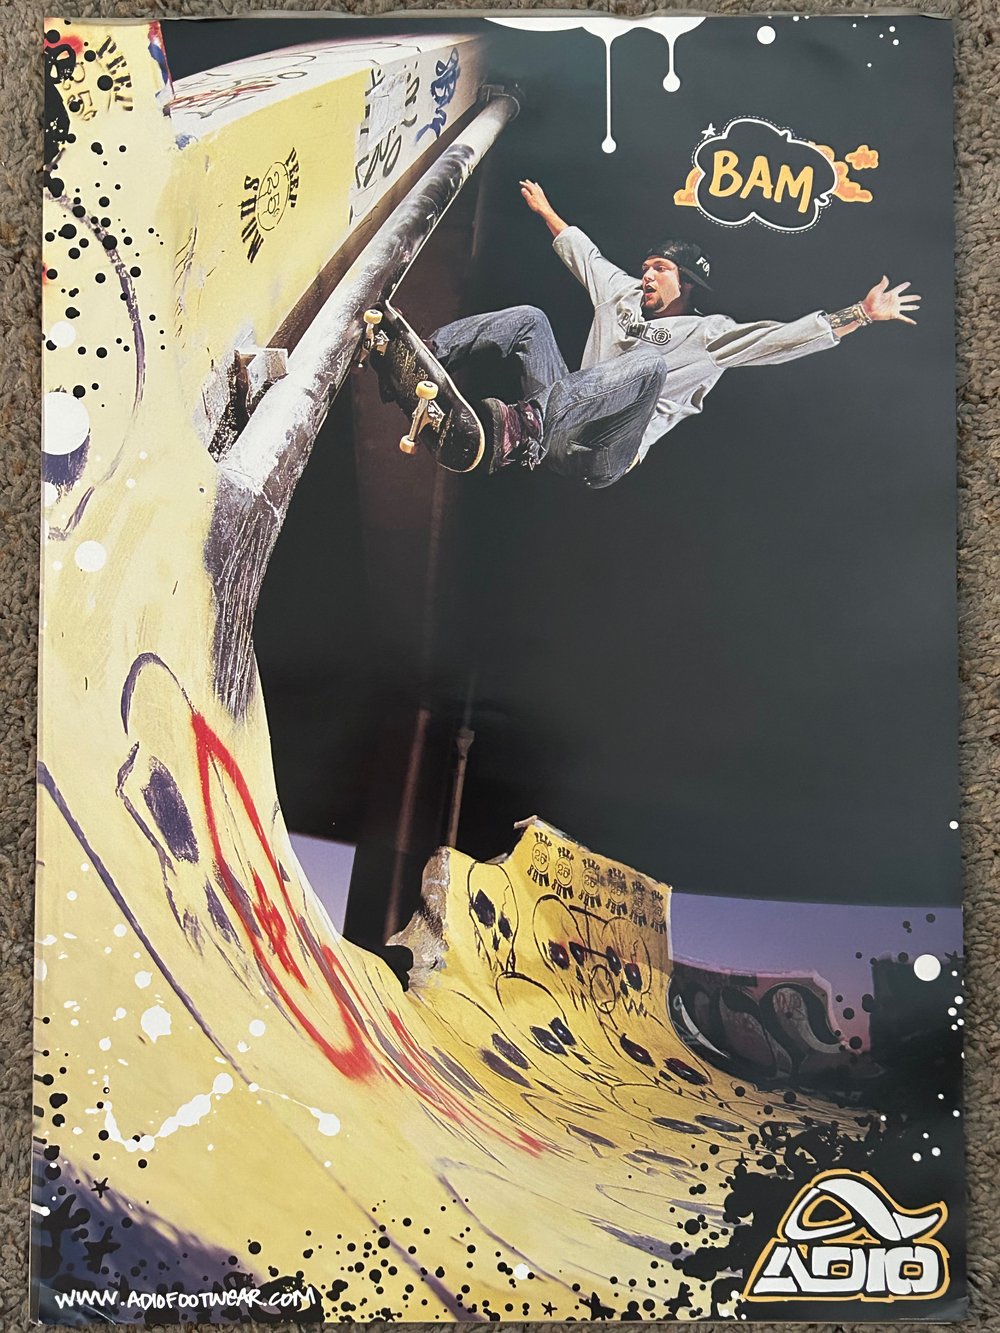 Signed, Double-Sided Vintage Skate Poster